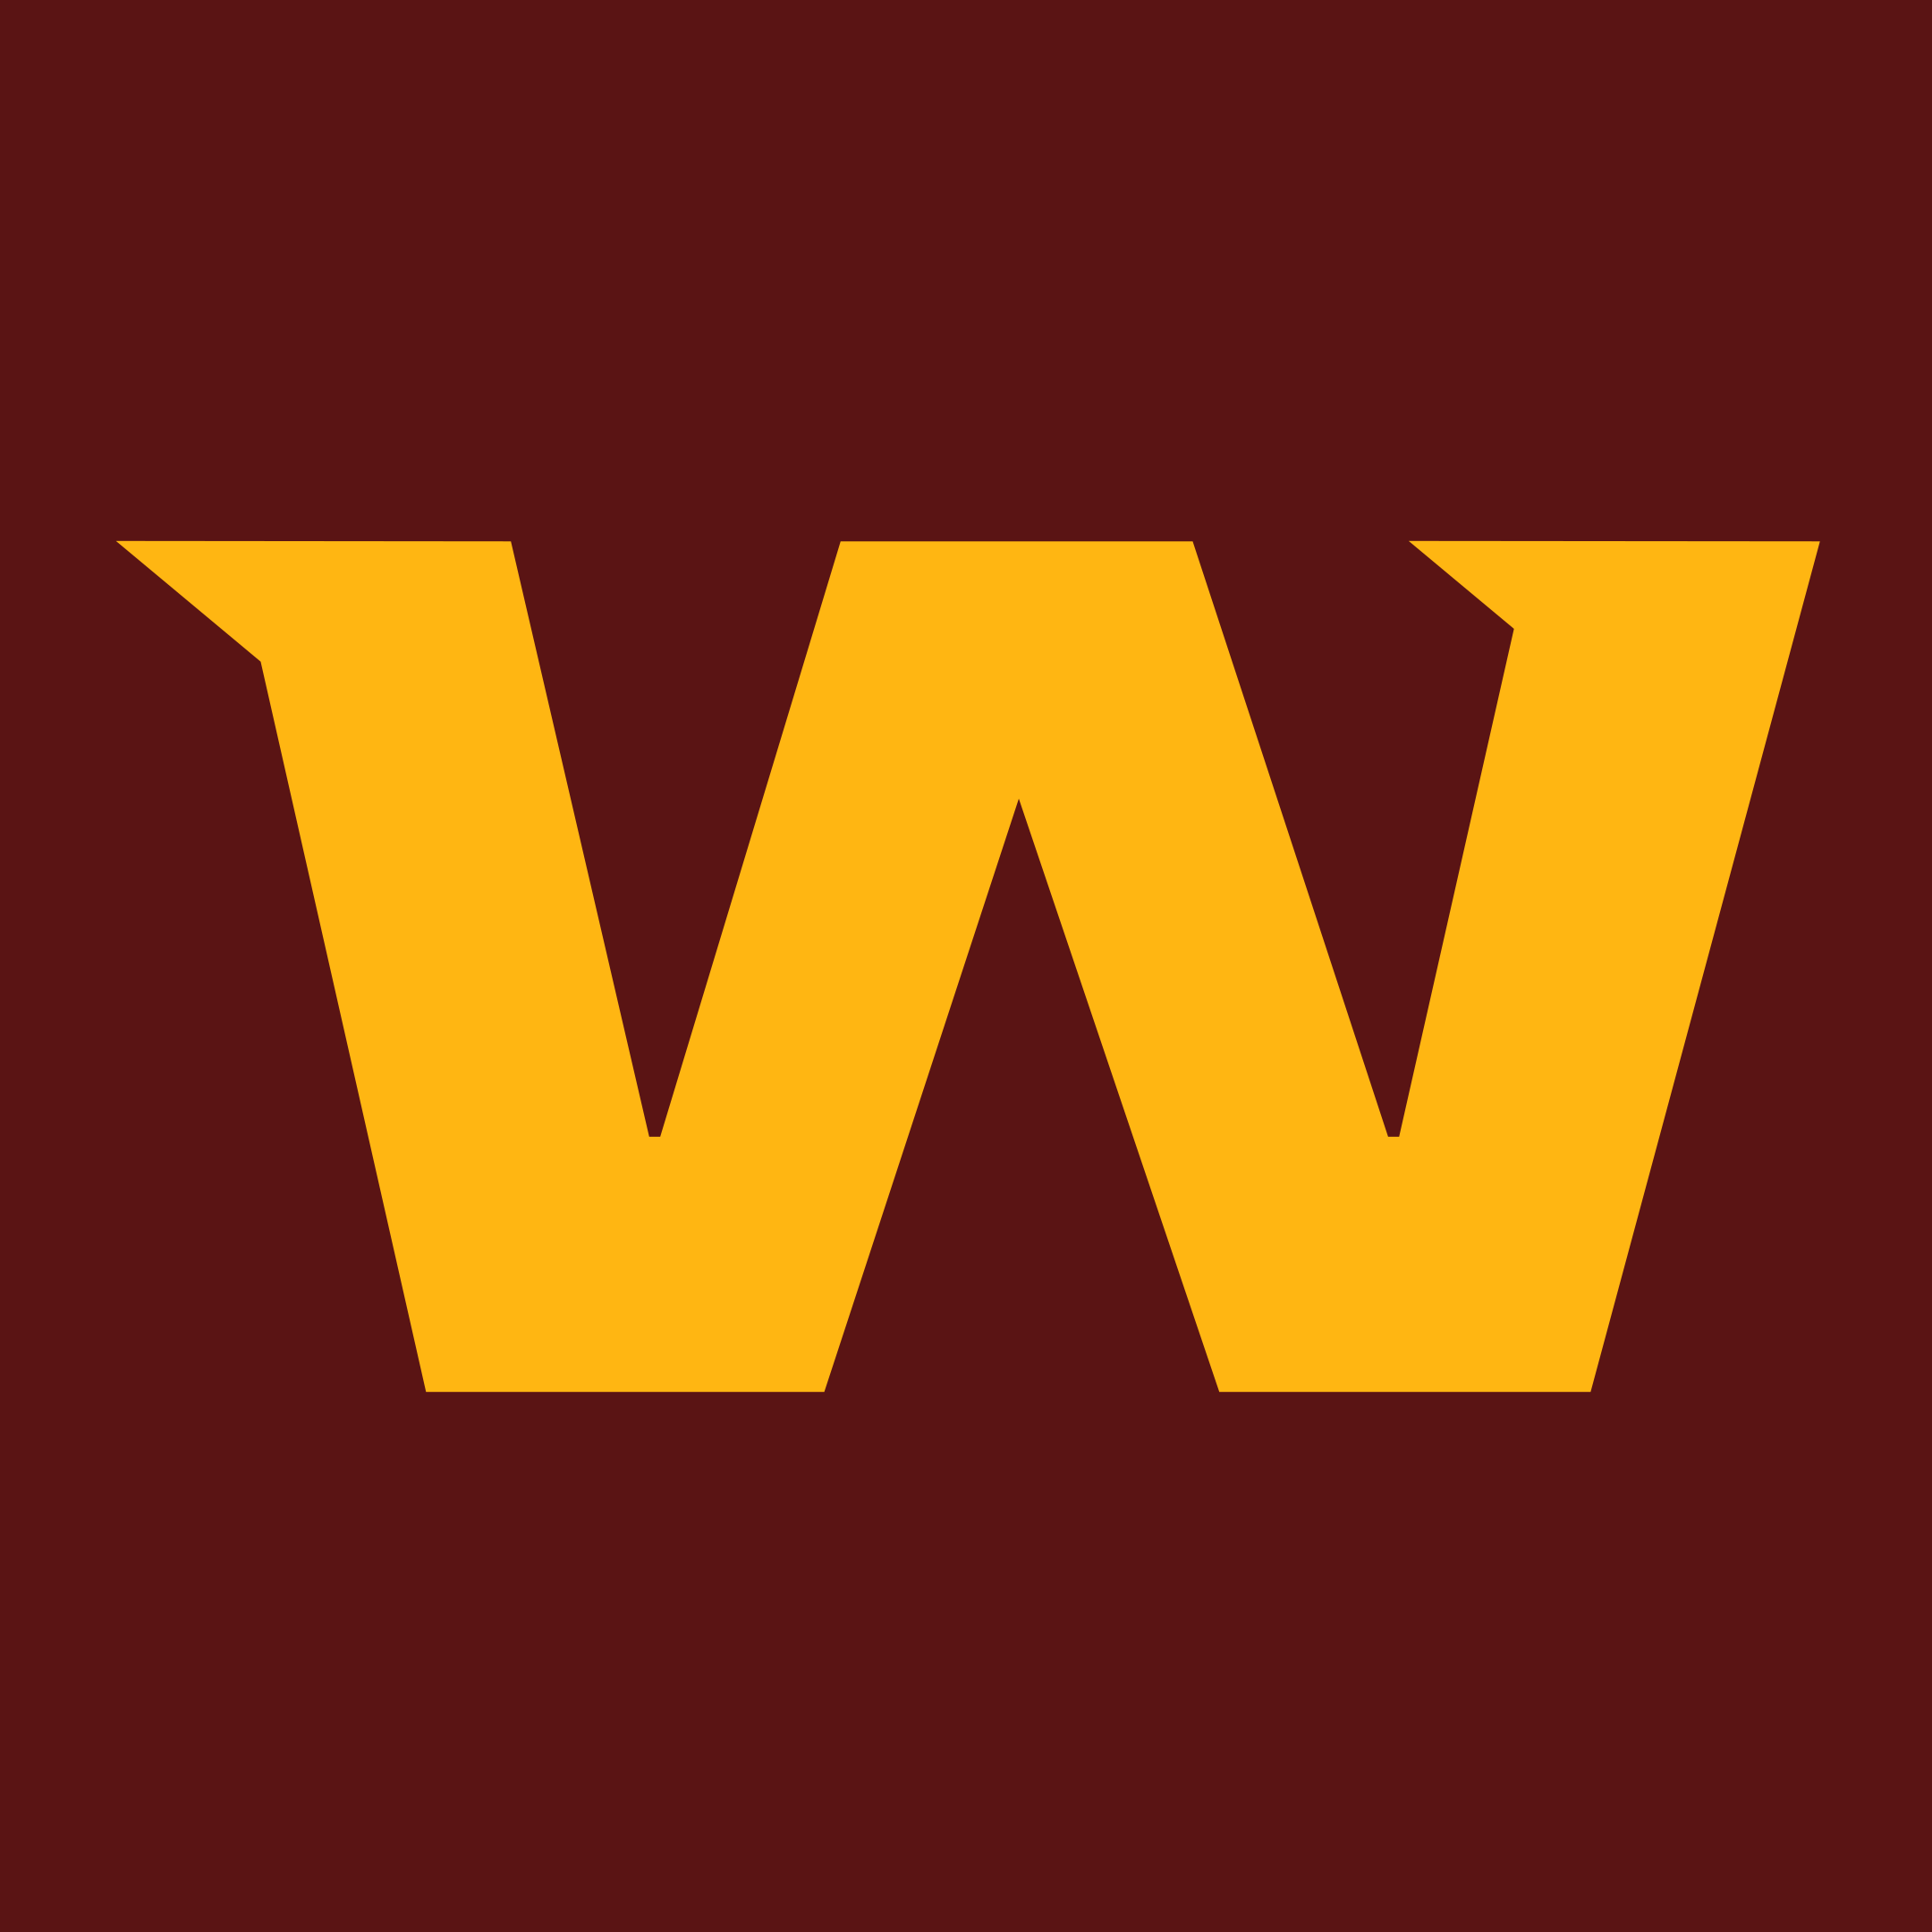 washington football team logo 1 - Washington Football Team Logo